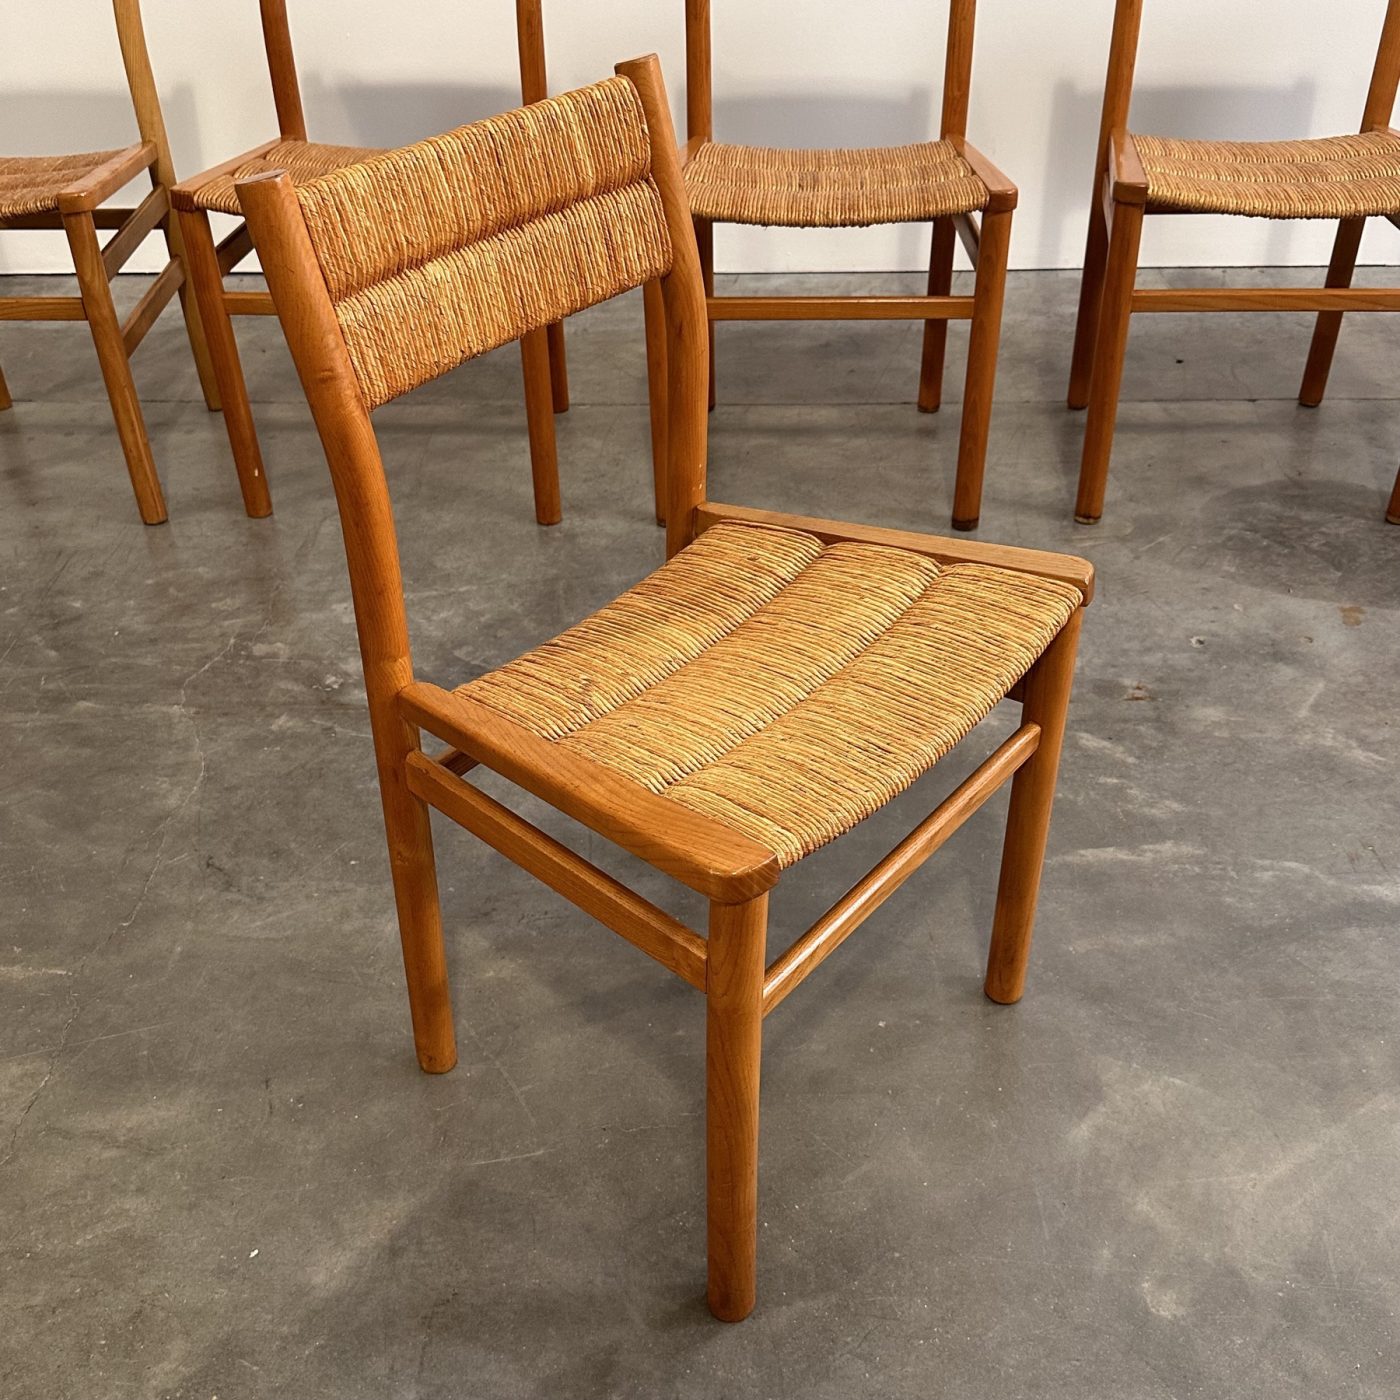 objet-vagabond-delaye-chairs0003